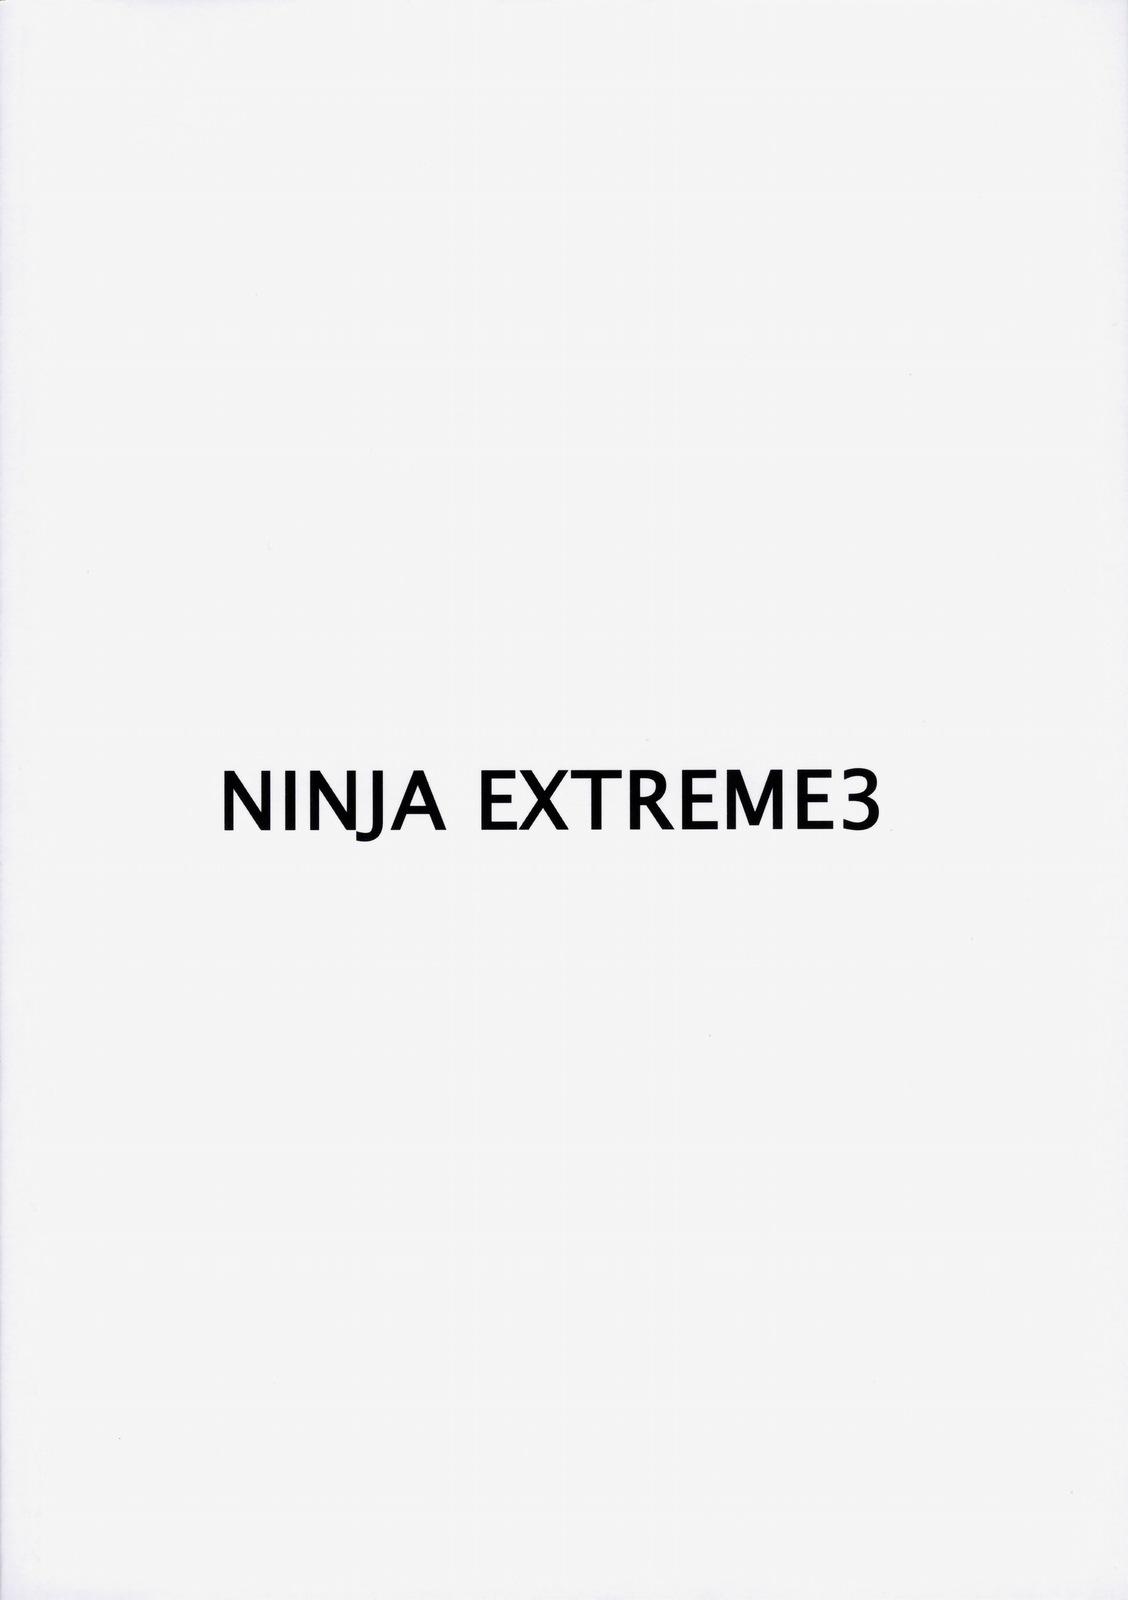 NINJA EXTREME 3 Onna Goroshi Shippuuden 25